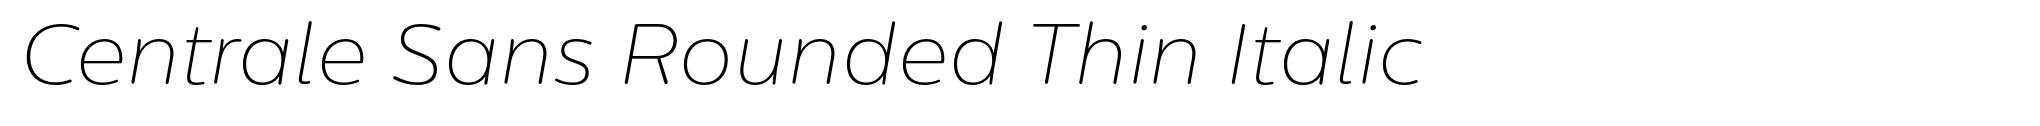 Centrale Sans Rounded Thin Italic image